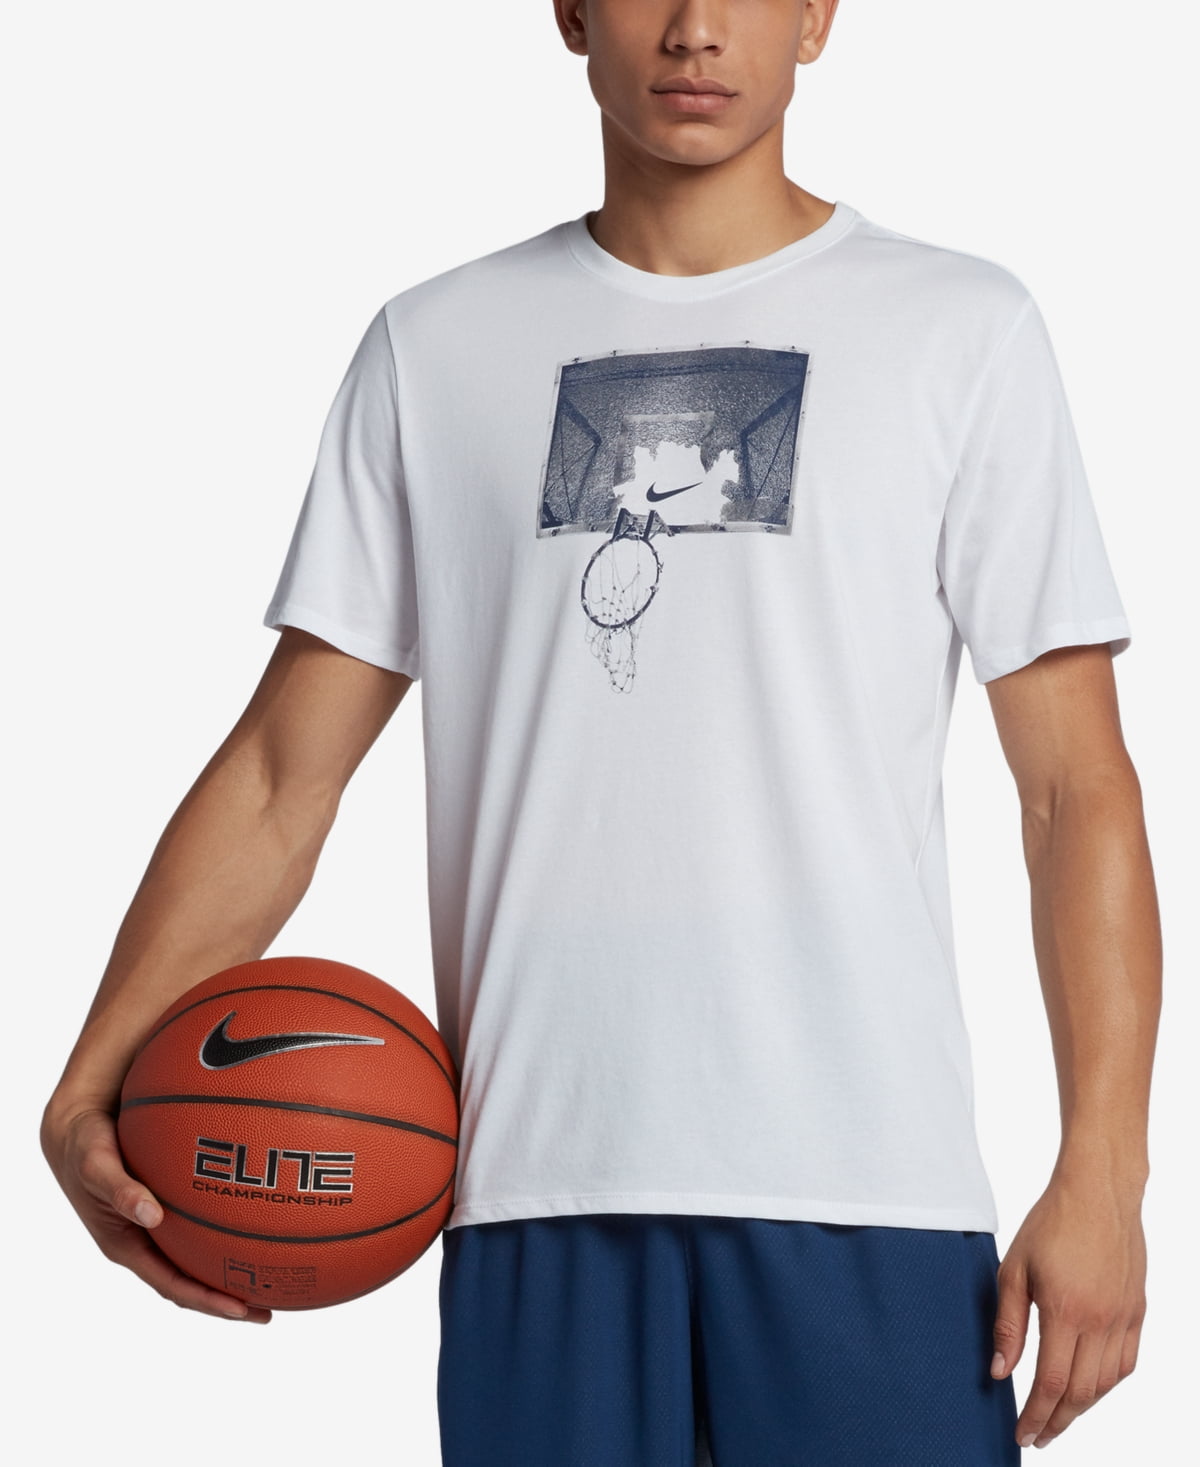 Nike - Mens T-Shirt Basketball Hoop Graphic Print Tee $25 XL - Walmart ...